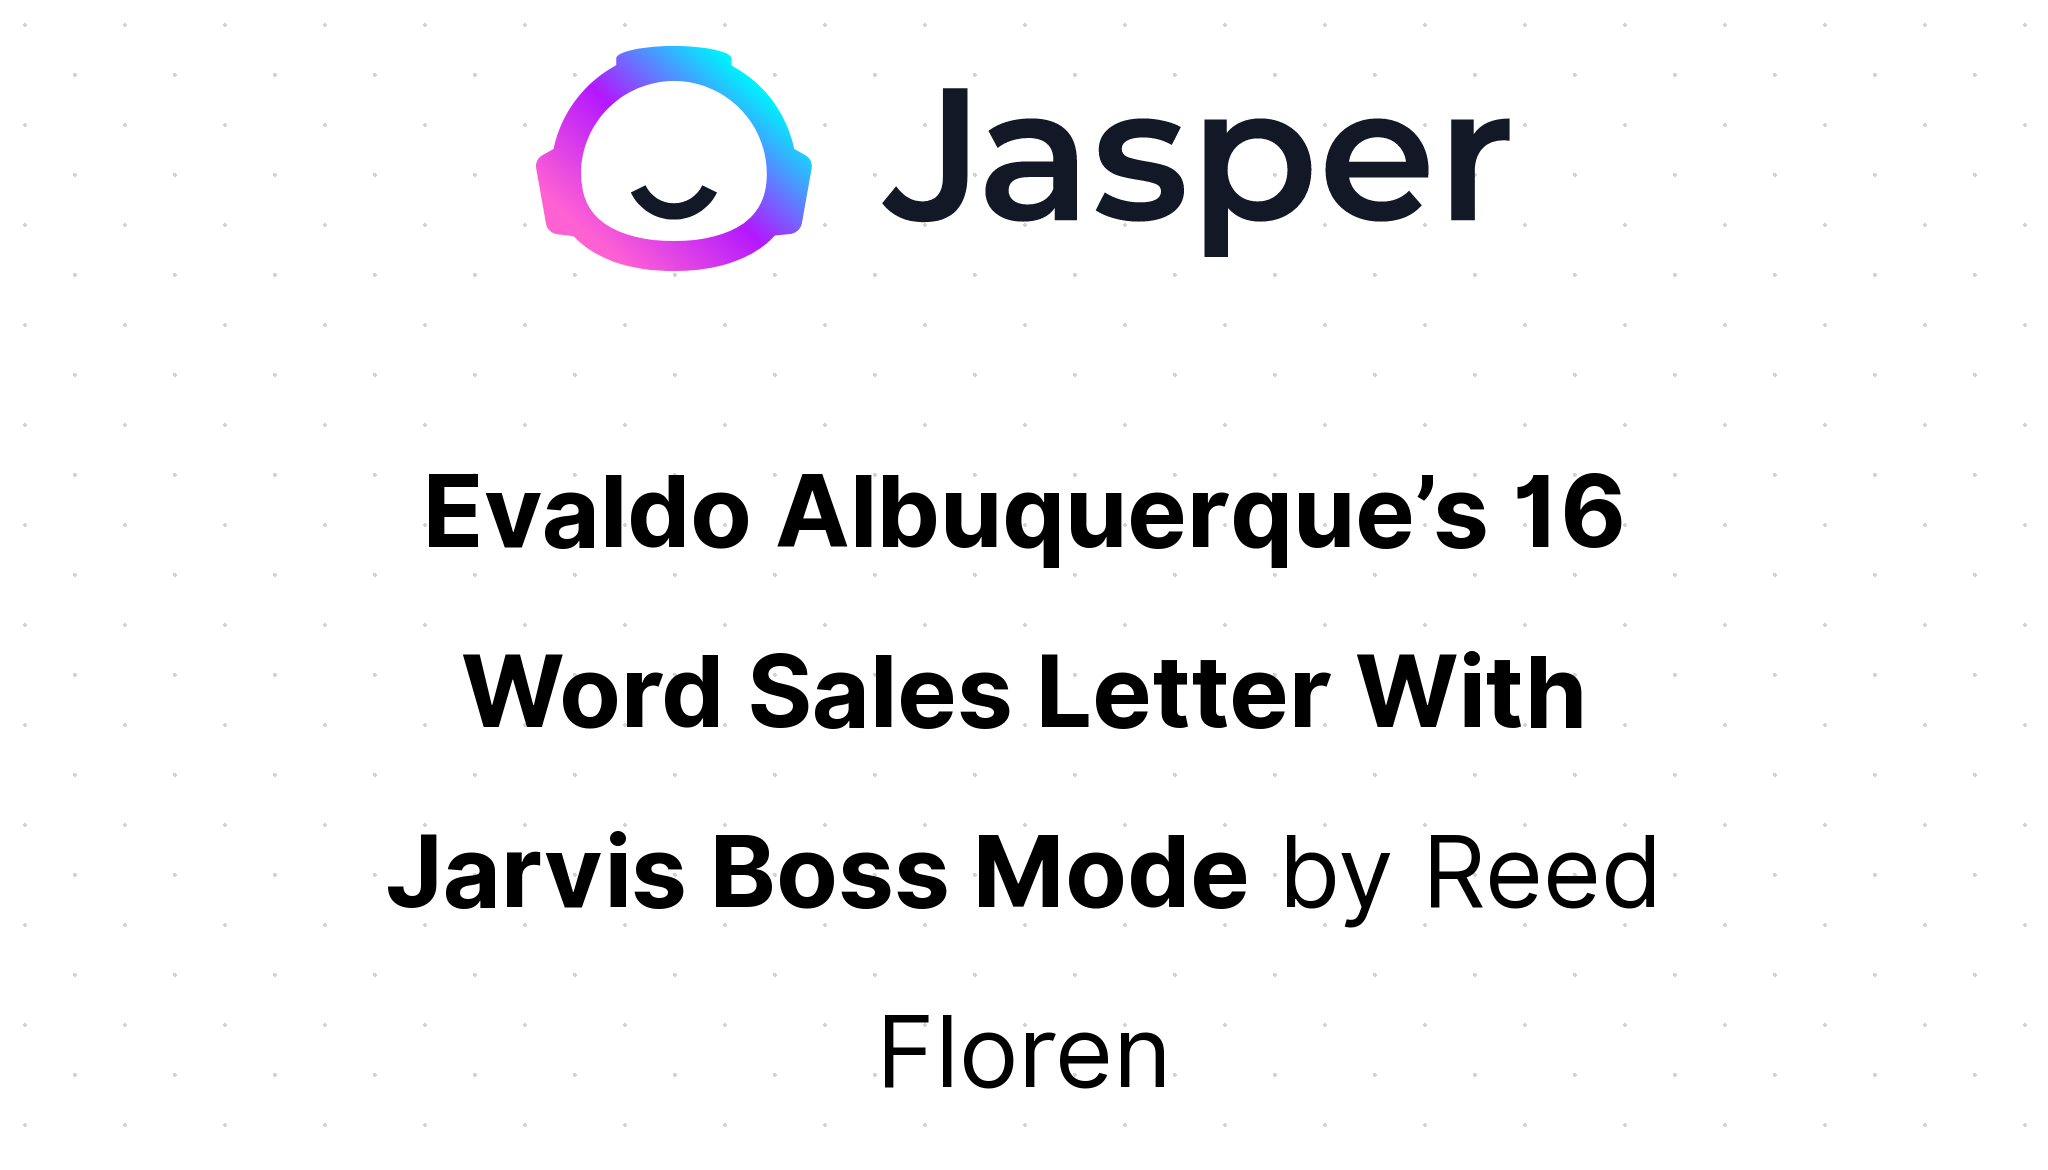 evaldo-albuquerque-s-16-word-sales-letter-with-jarvis-boss-mode-jasper